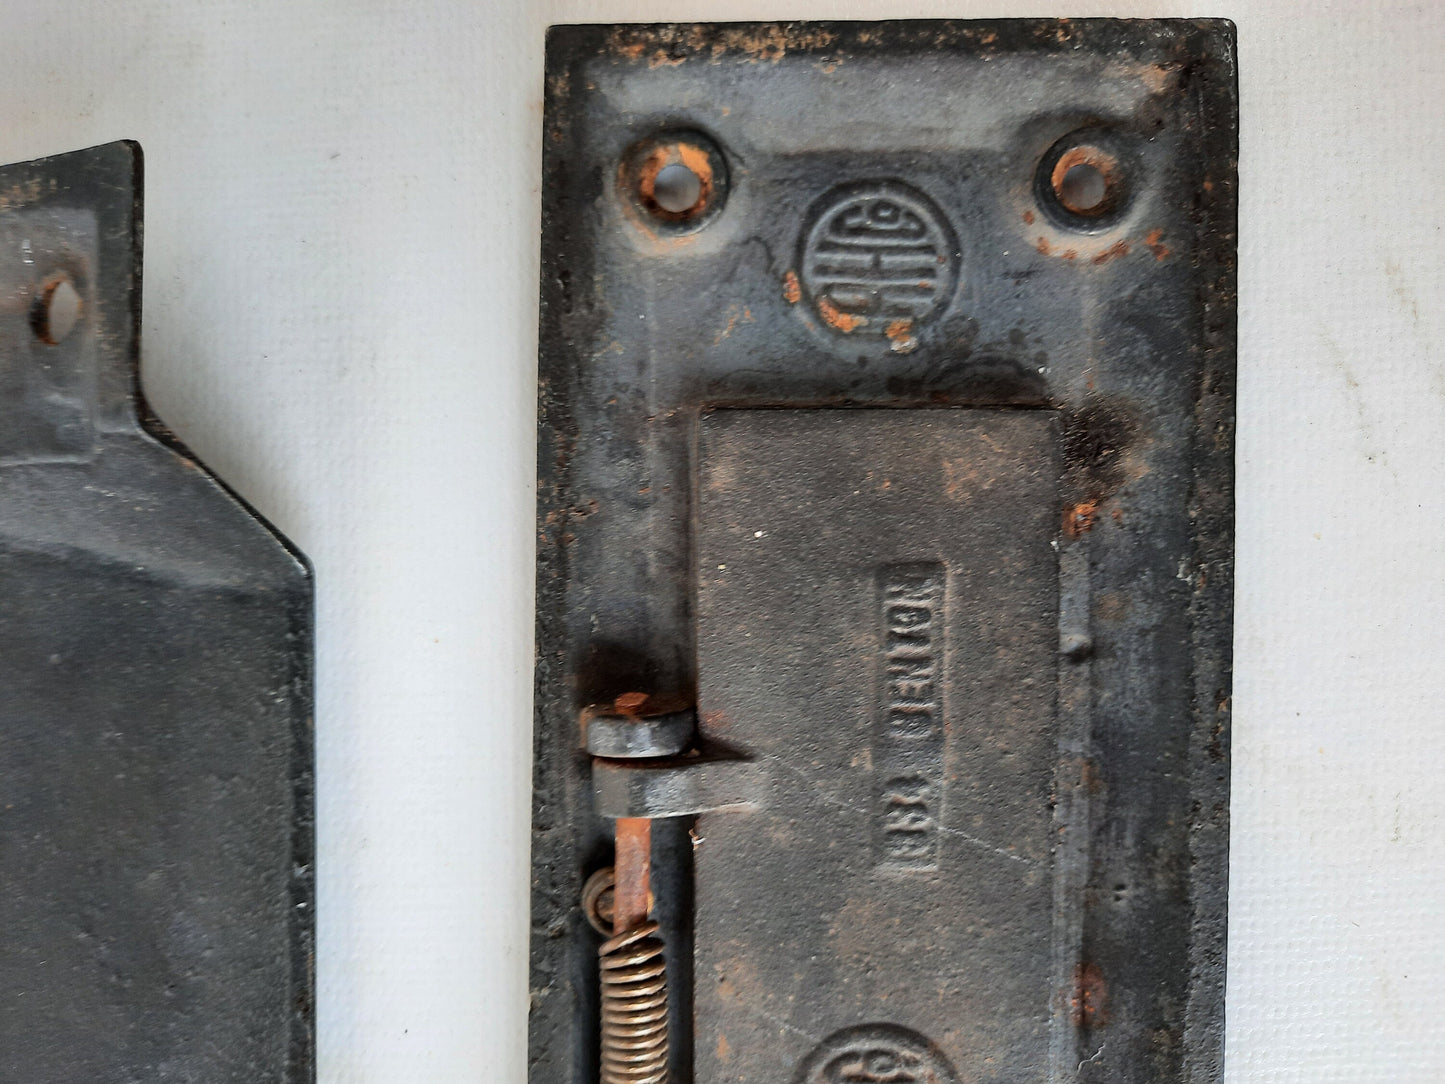 Antique Letters Iron Door Mail Slot, Complete Set, Antique Door Mail or Letter Slot 013115